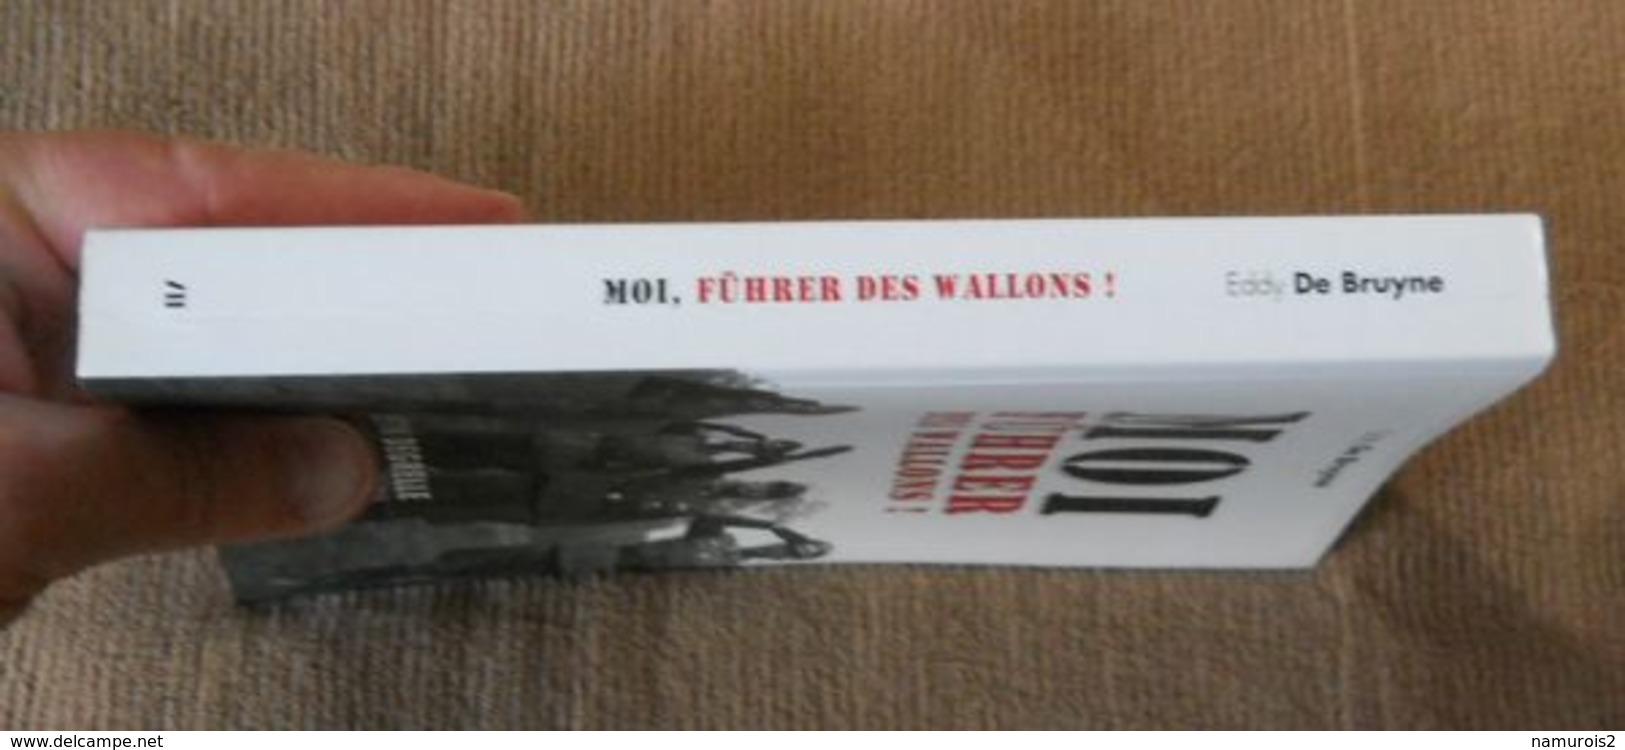 Moi Führer des wallons (Eddy De Bruyne)  Léon Degrelle et la collaboration Outre-Rhin  Sep 44 - Mai 45